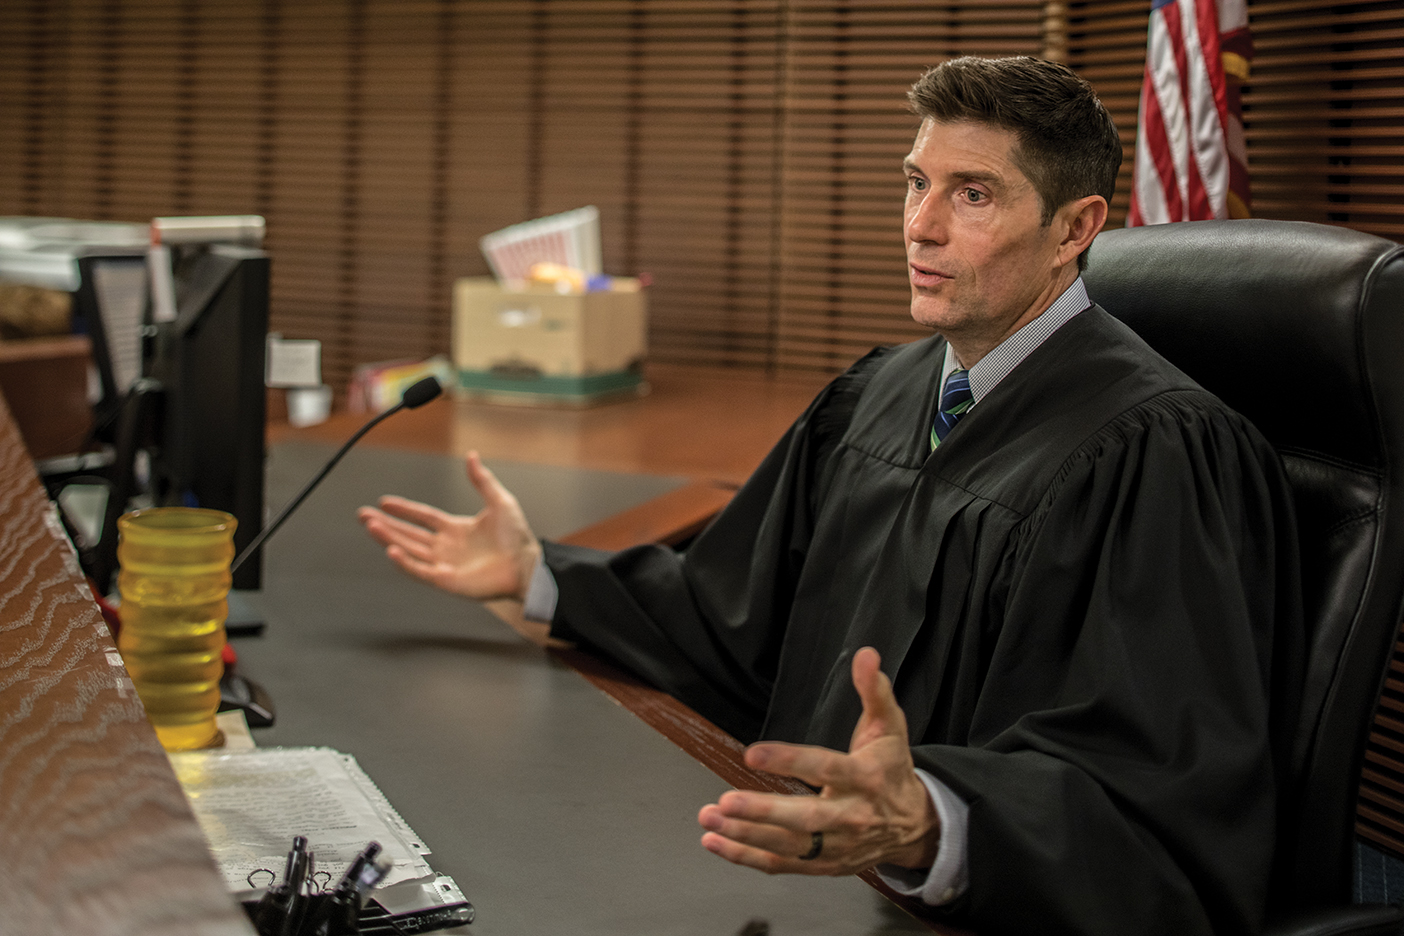 Judge Hedger at his desk